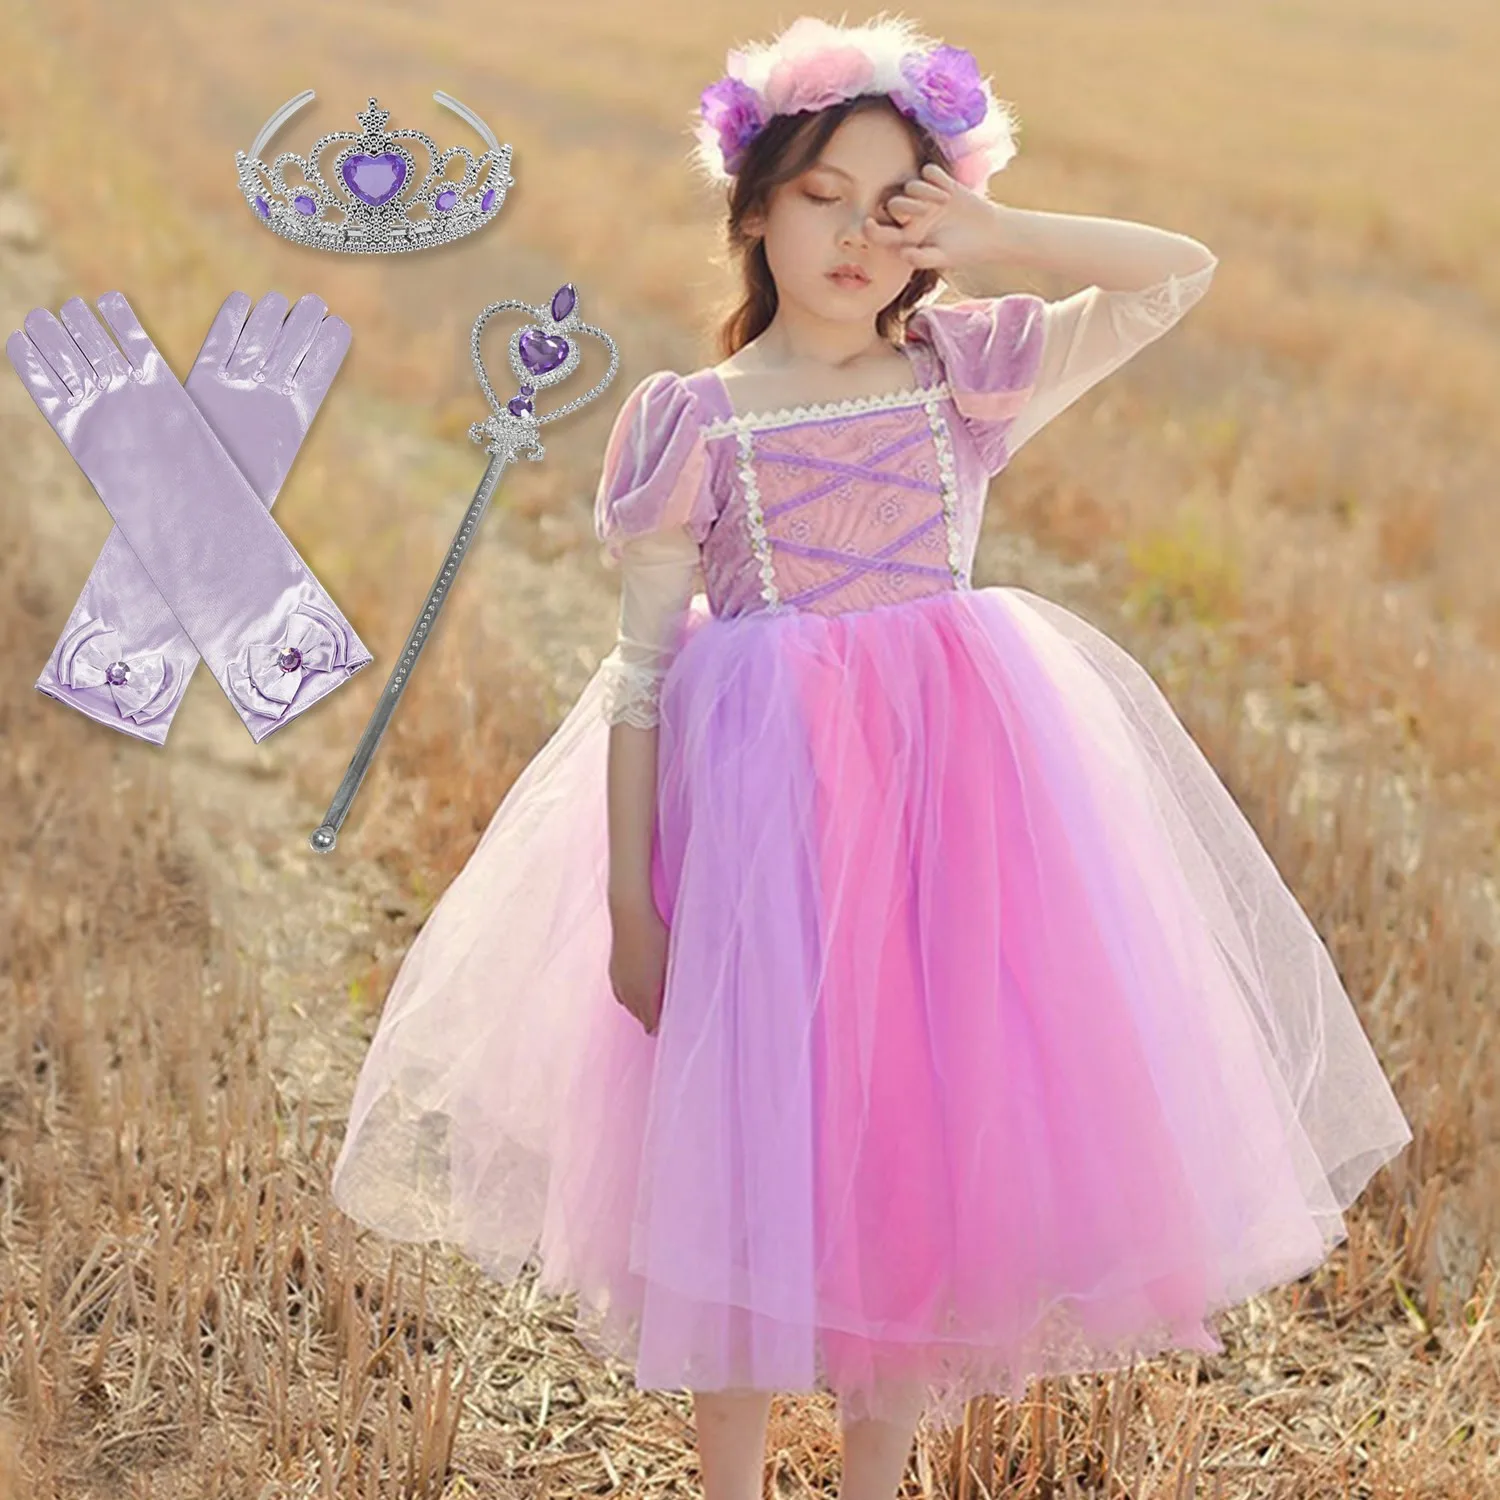 Girls party princess dress fancy dress costume dress children's wear